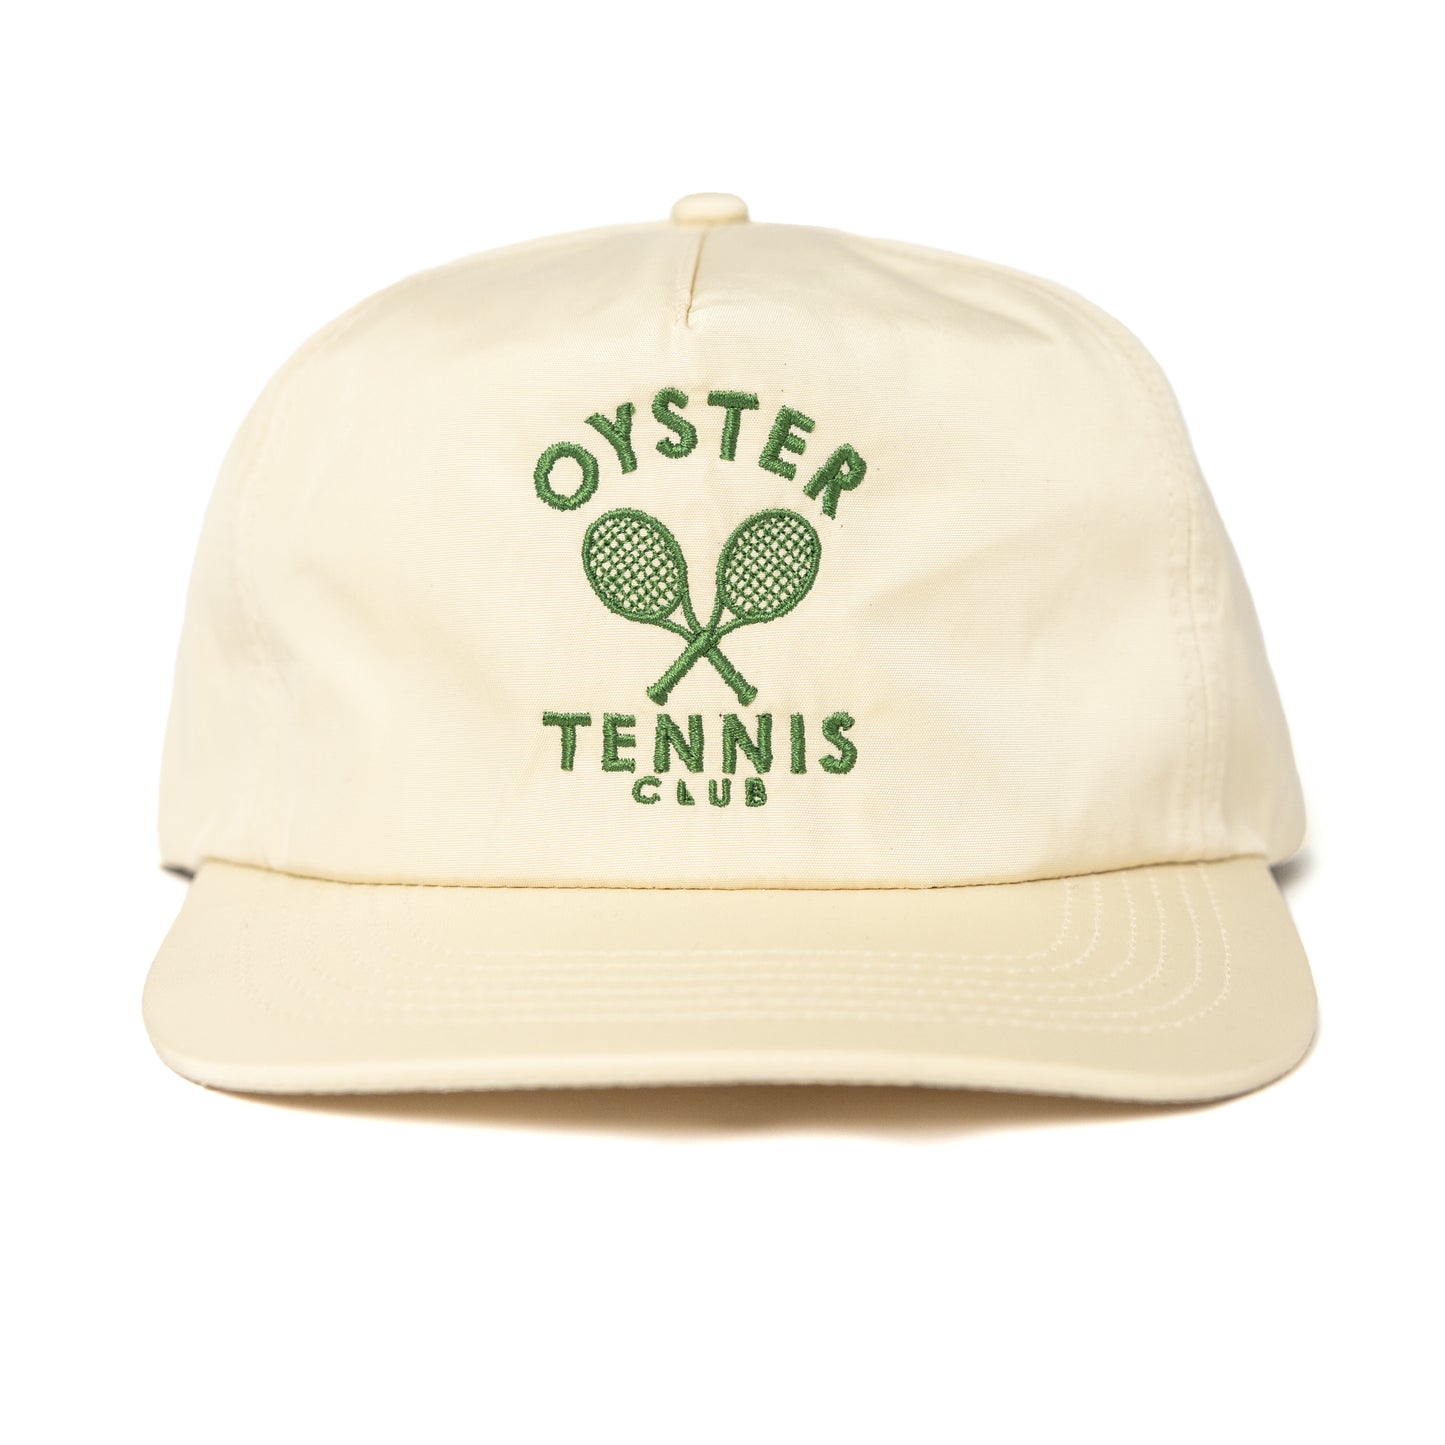 Oyster Tennis Club Hat (Vintage White)